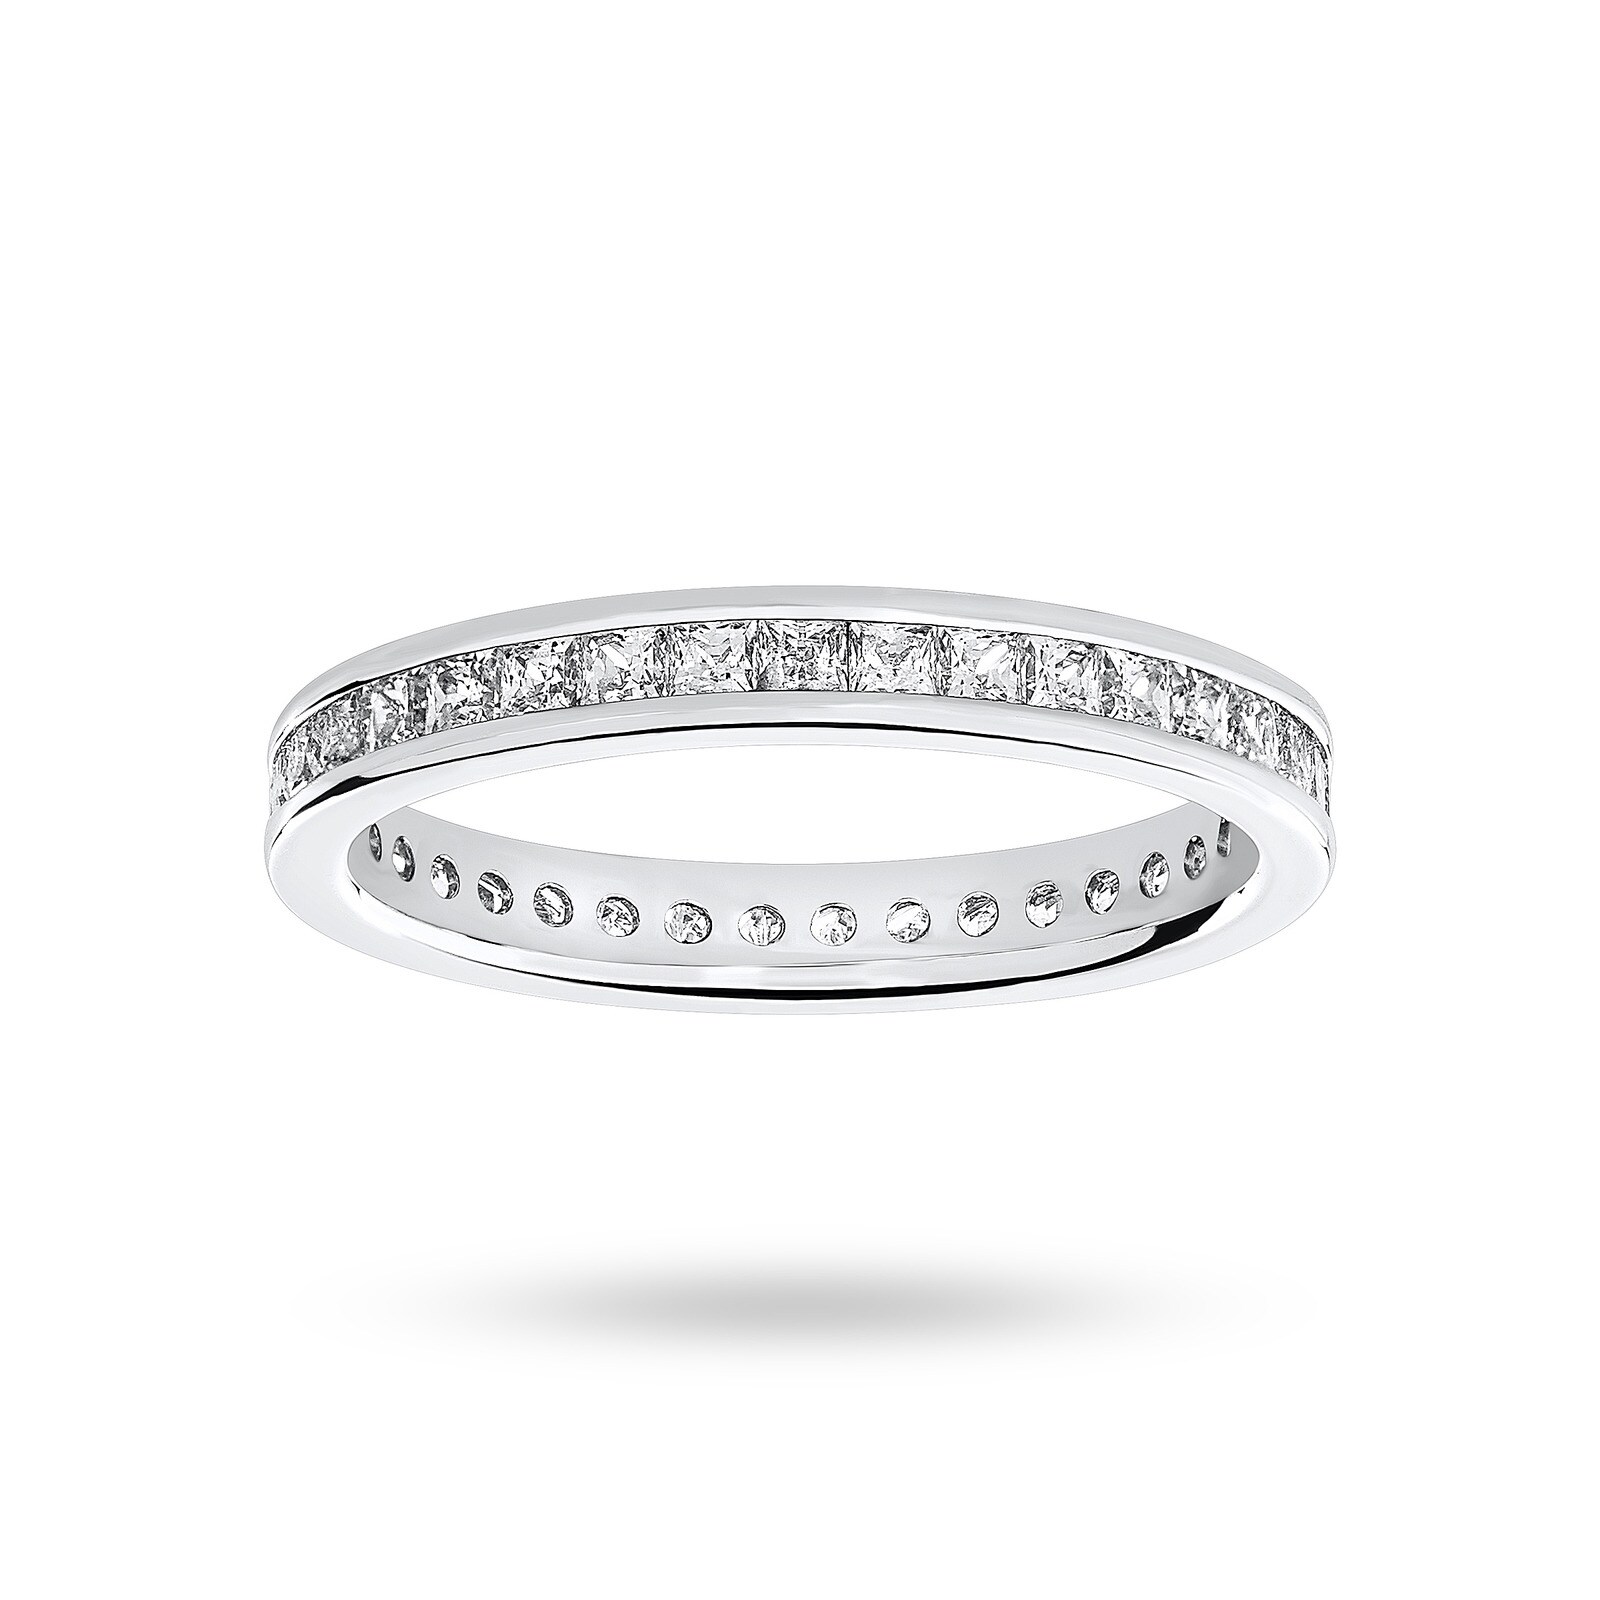 Platinum 1.00 Carat Princess Cut Channel Set Full Eternity Ring - Ring Size P